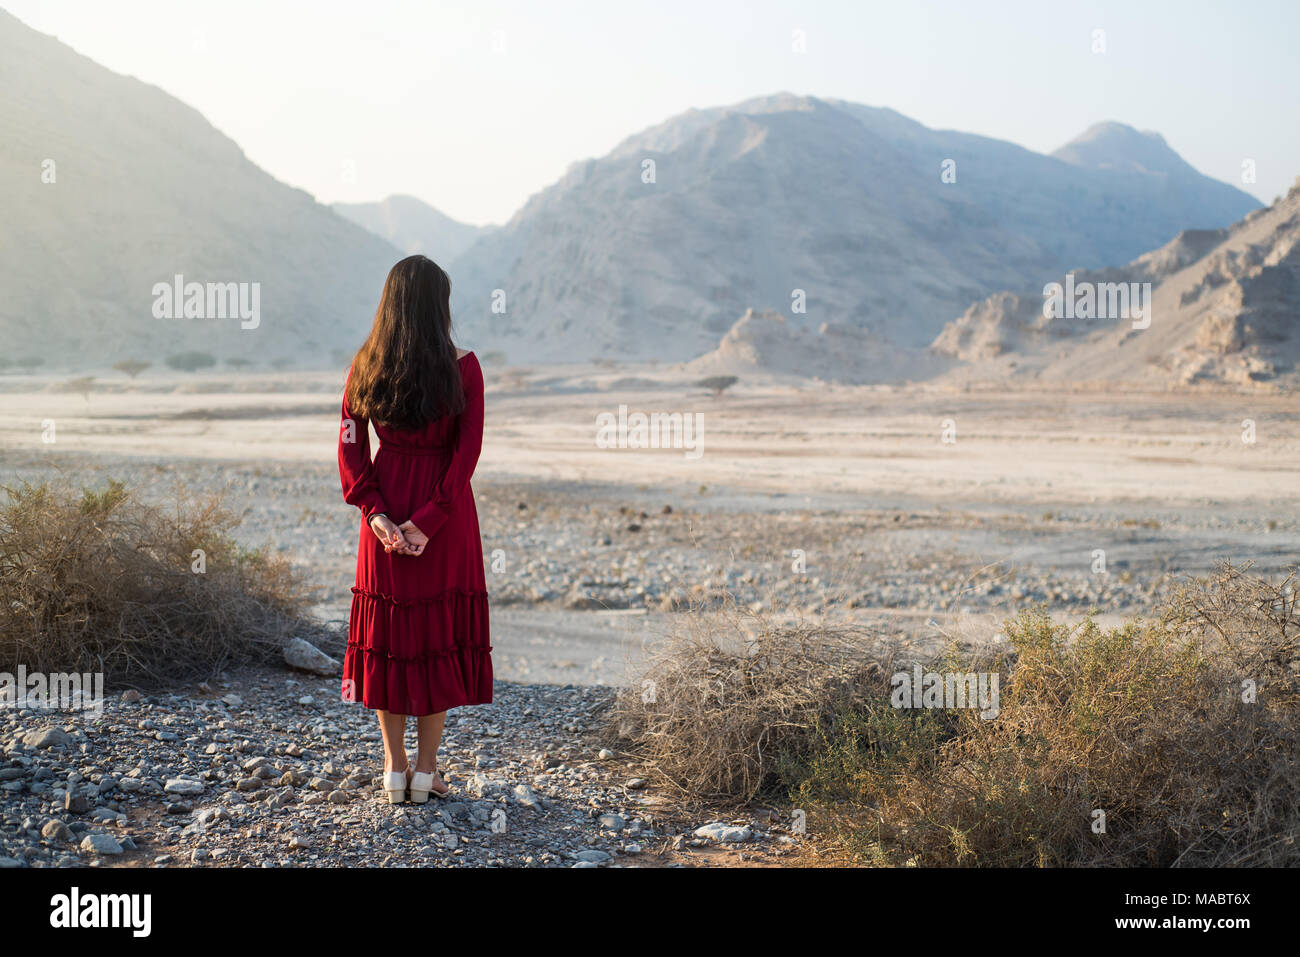 Woman enjoying dessert valley and mountain scenery wearing red dress Stock Photo